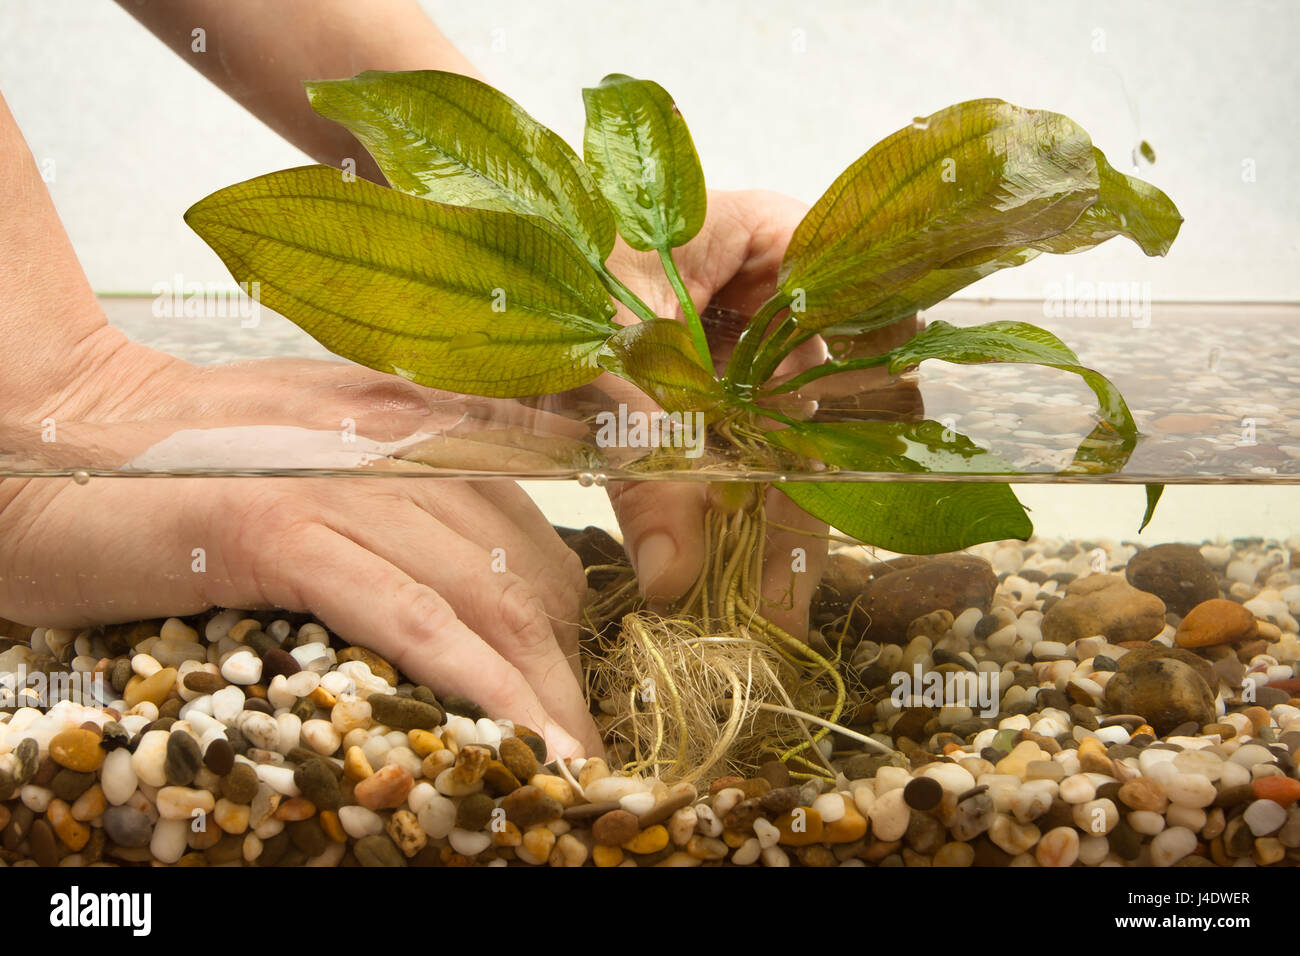 hands planting water plant echinodorus in new aquarium Stock Photo